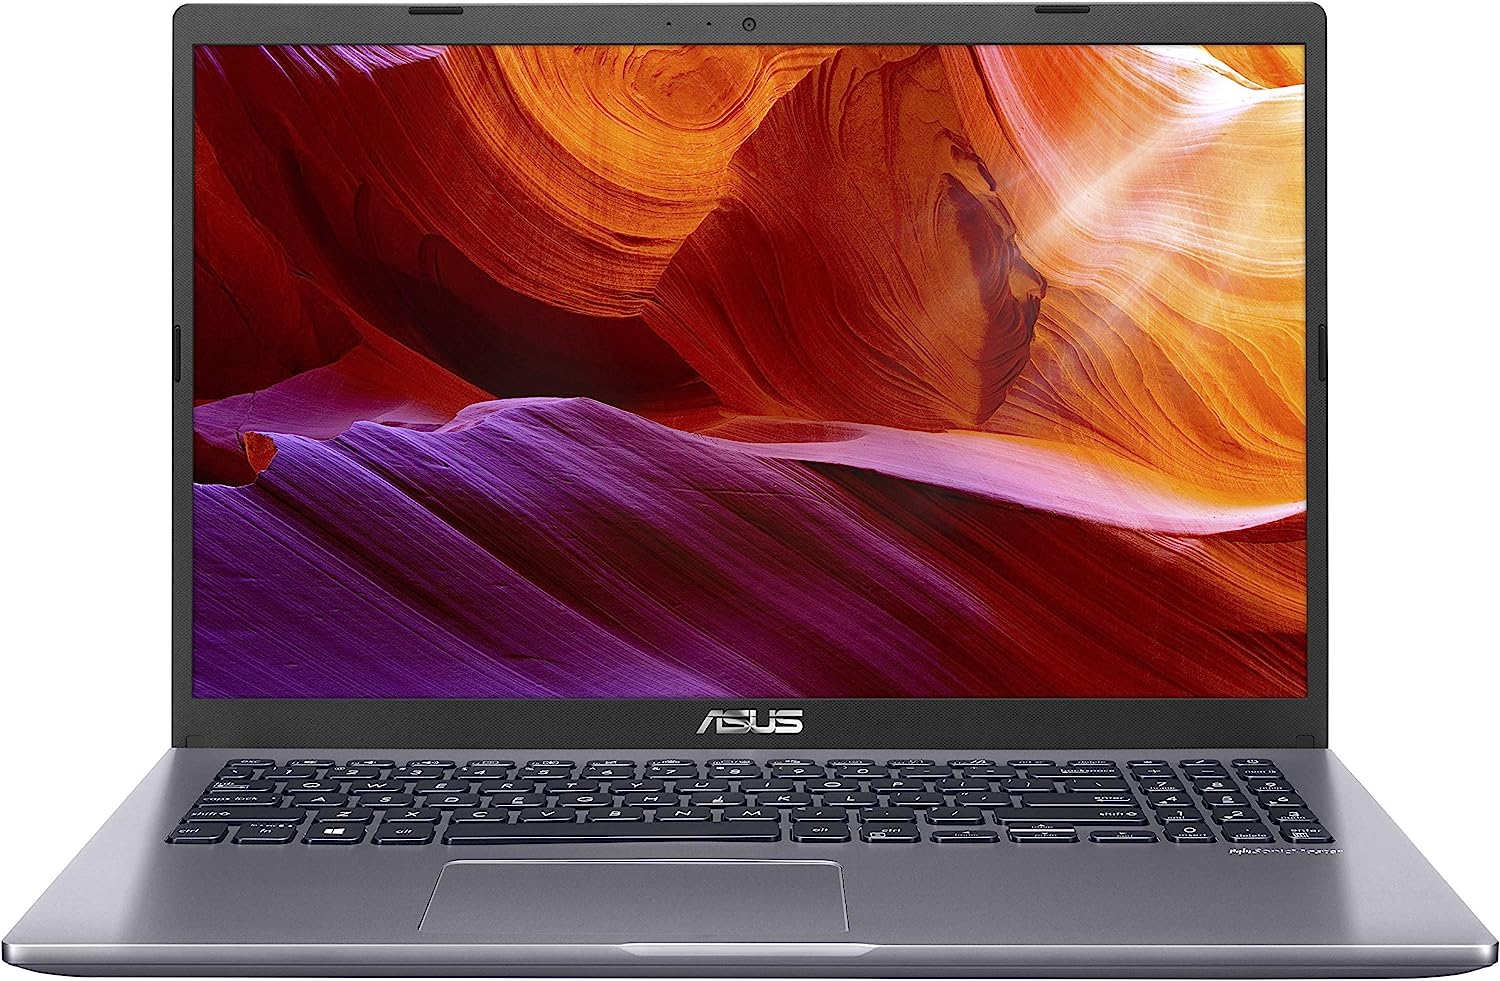 ASUS M509DARS21 M509 15.6 in. NanoEdge FHD, AMD Athlon Silver Laptop - $295